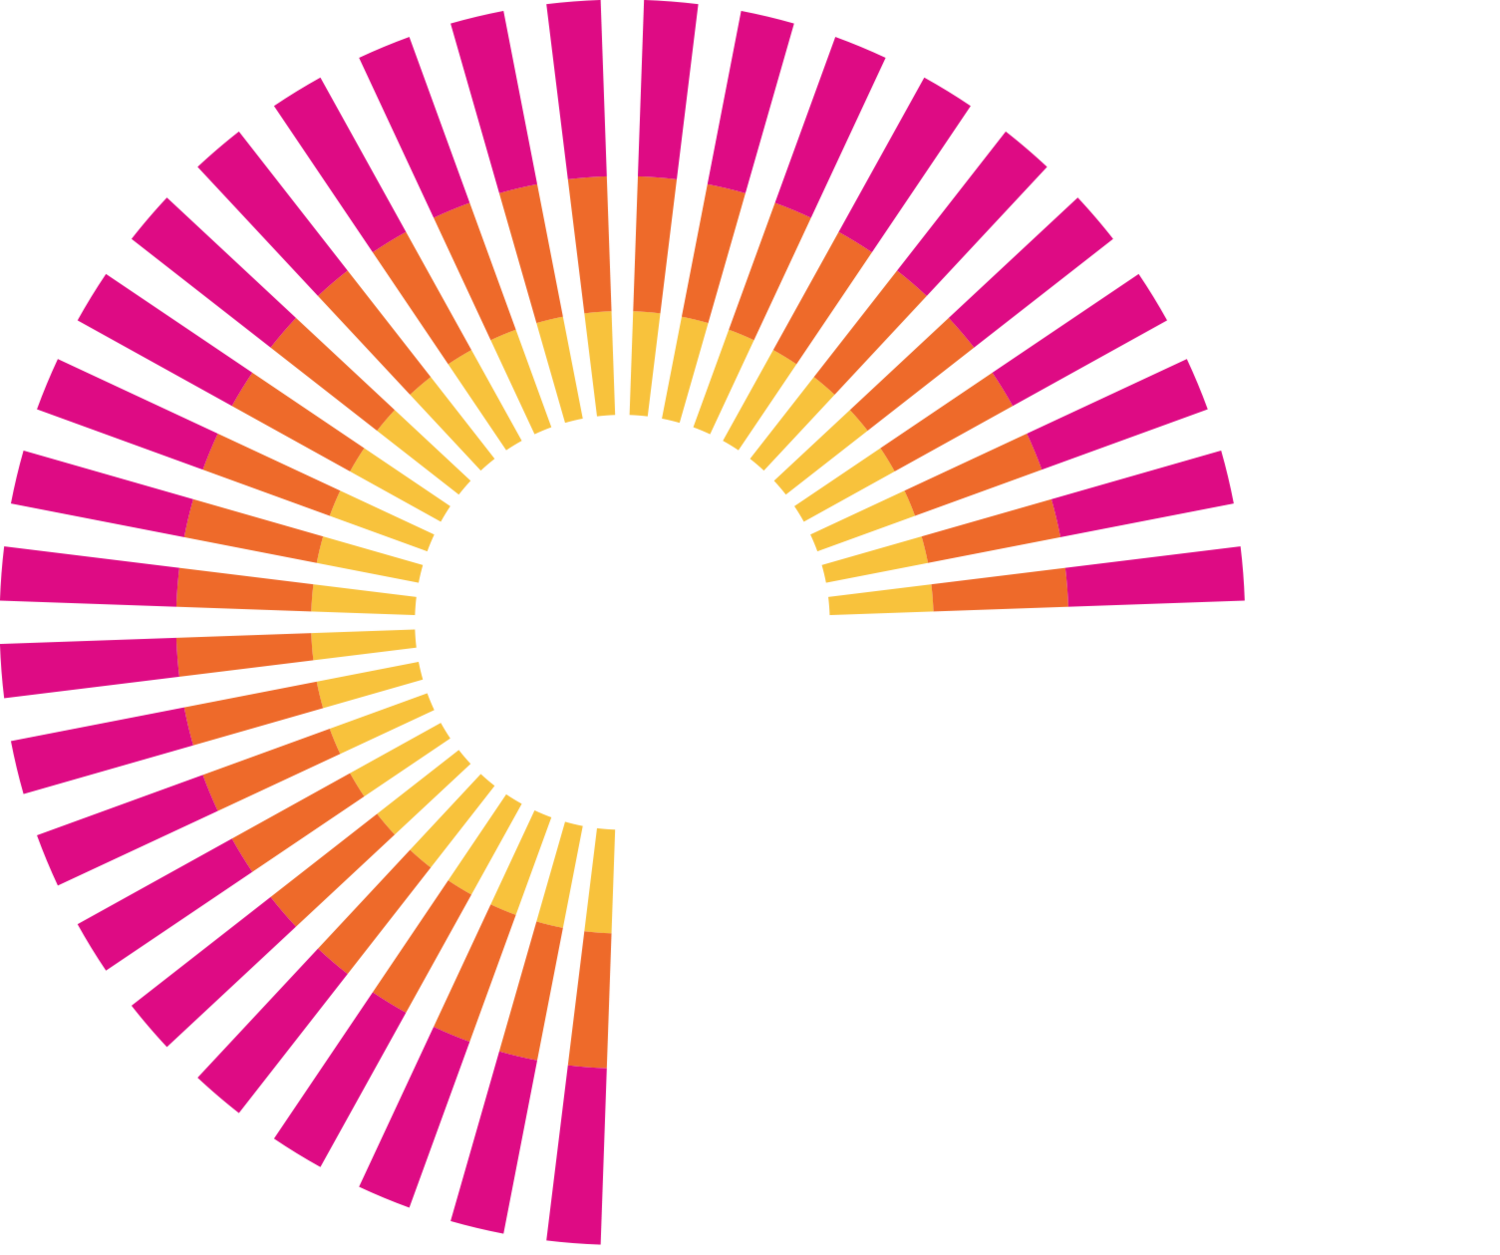 Princeton summer . Ticket clipart theater ticket